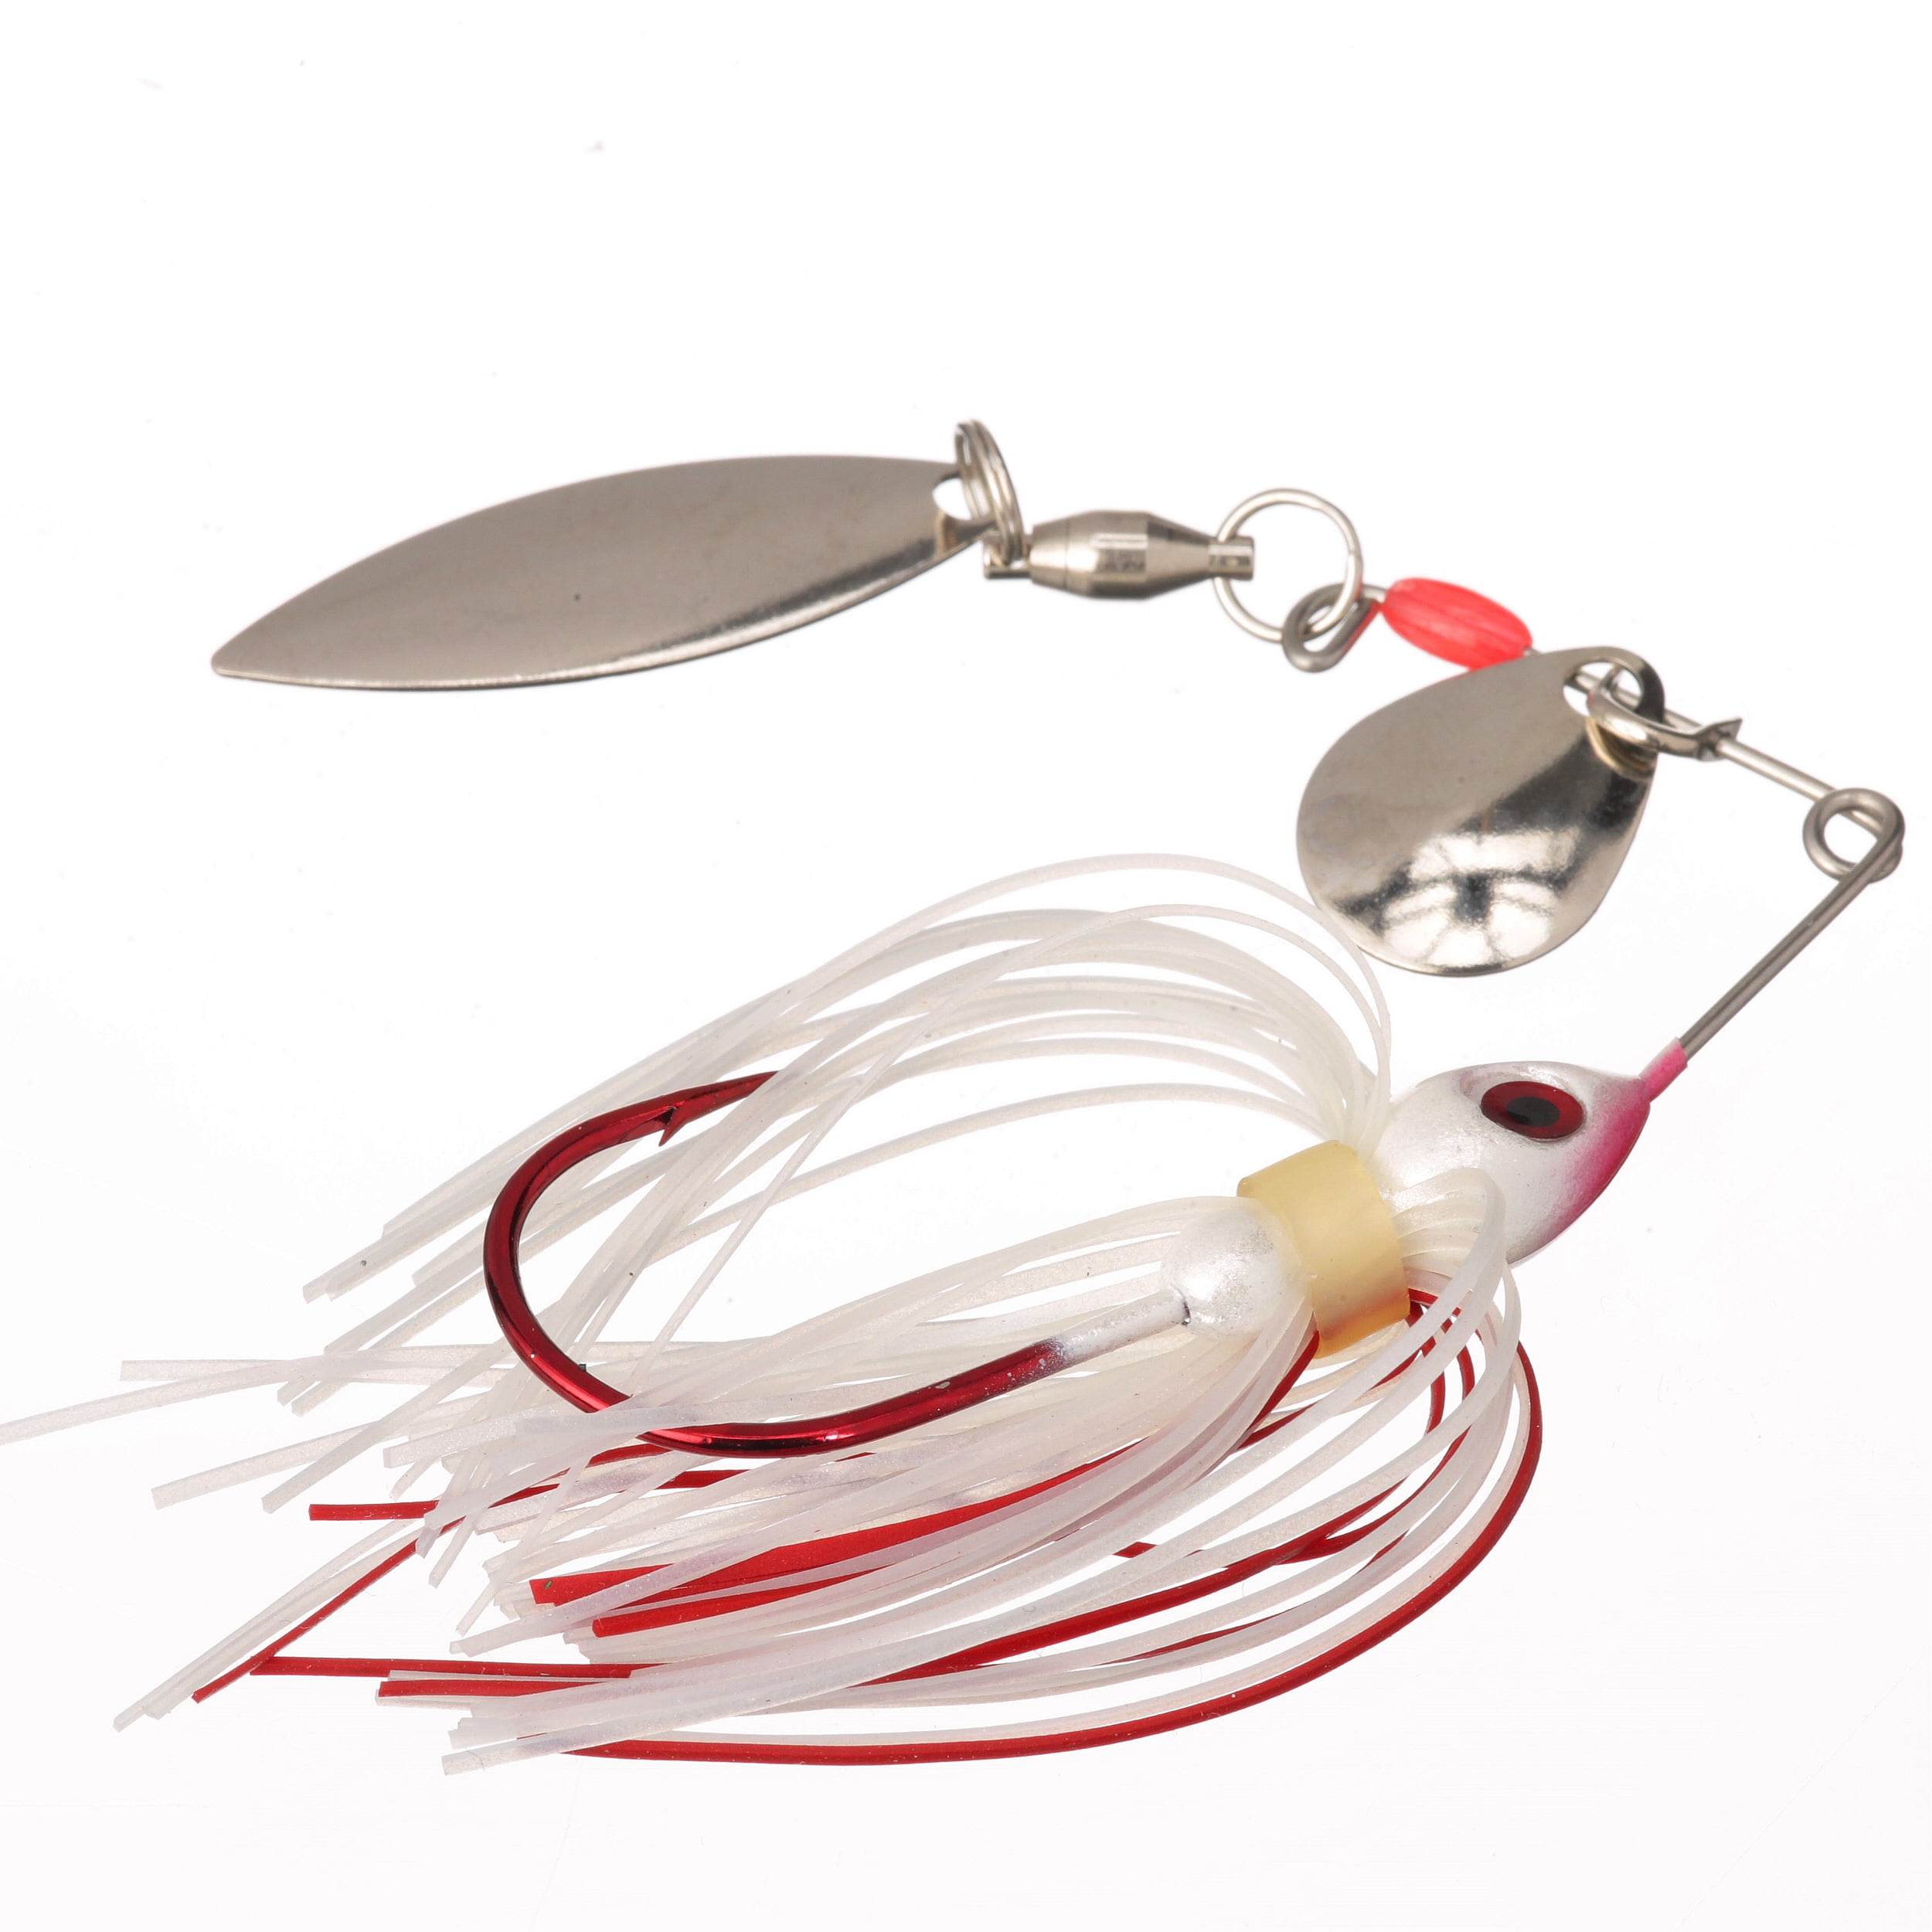  Strike King Premier Plus Spinnerbait,Bleeding Shad, 1/2oz :  Artificial Fishing Bait : Sports & Outdoors